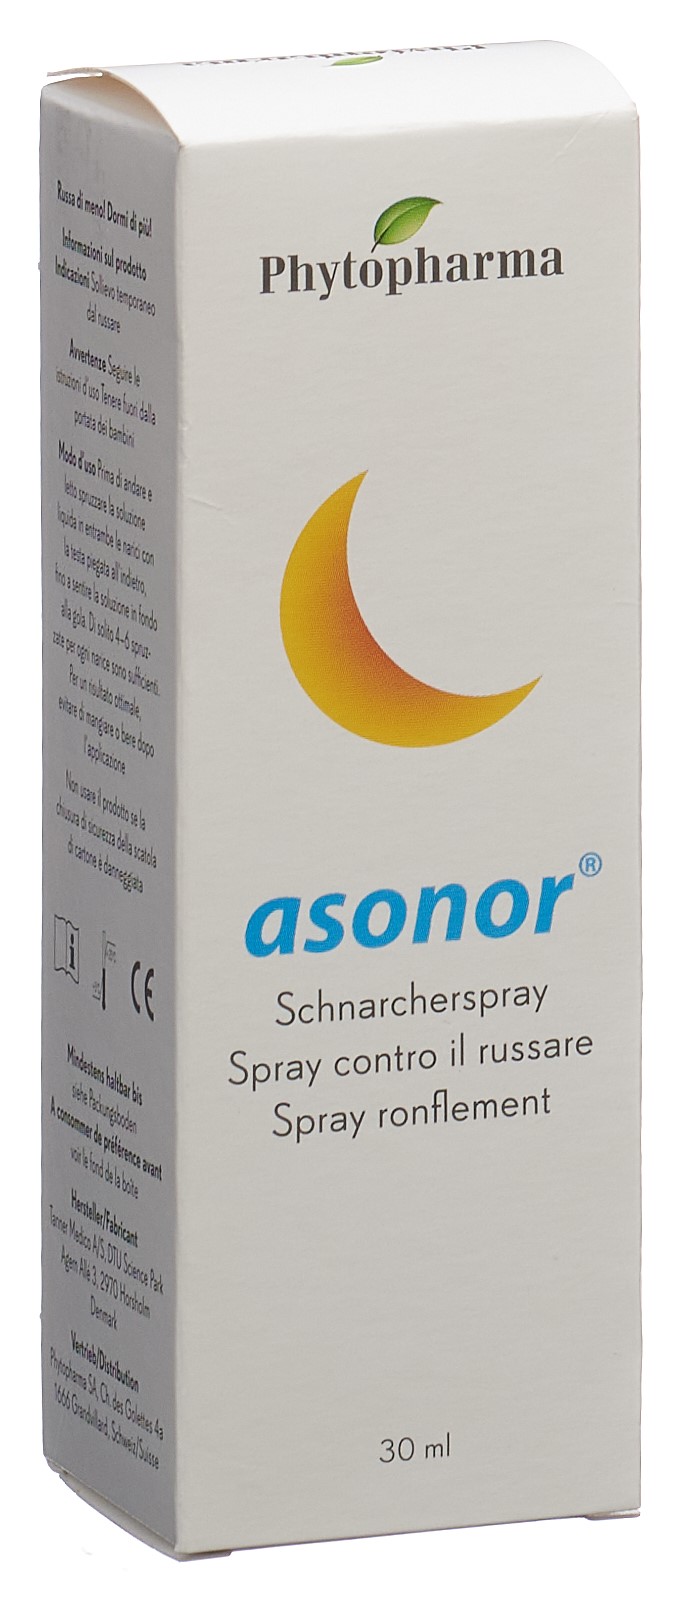 PHYTOPHARMA Asonor Schnarcherspray 30 ml